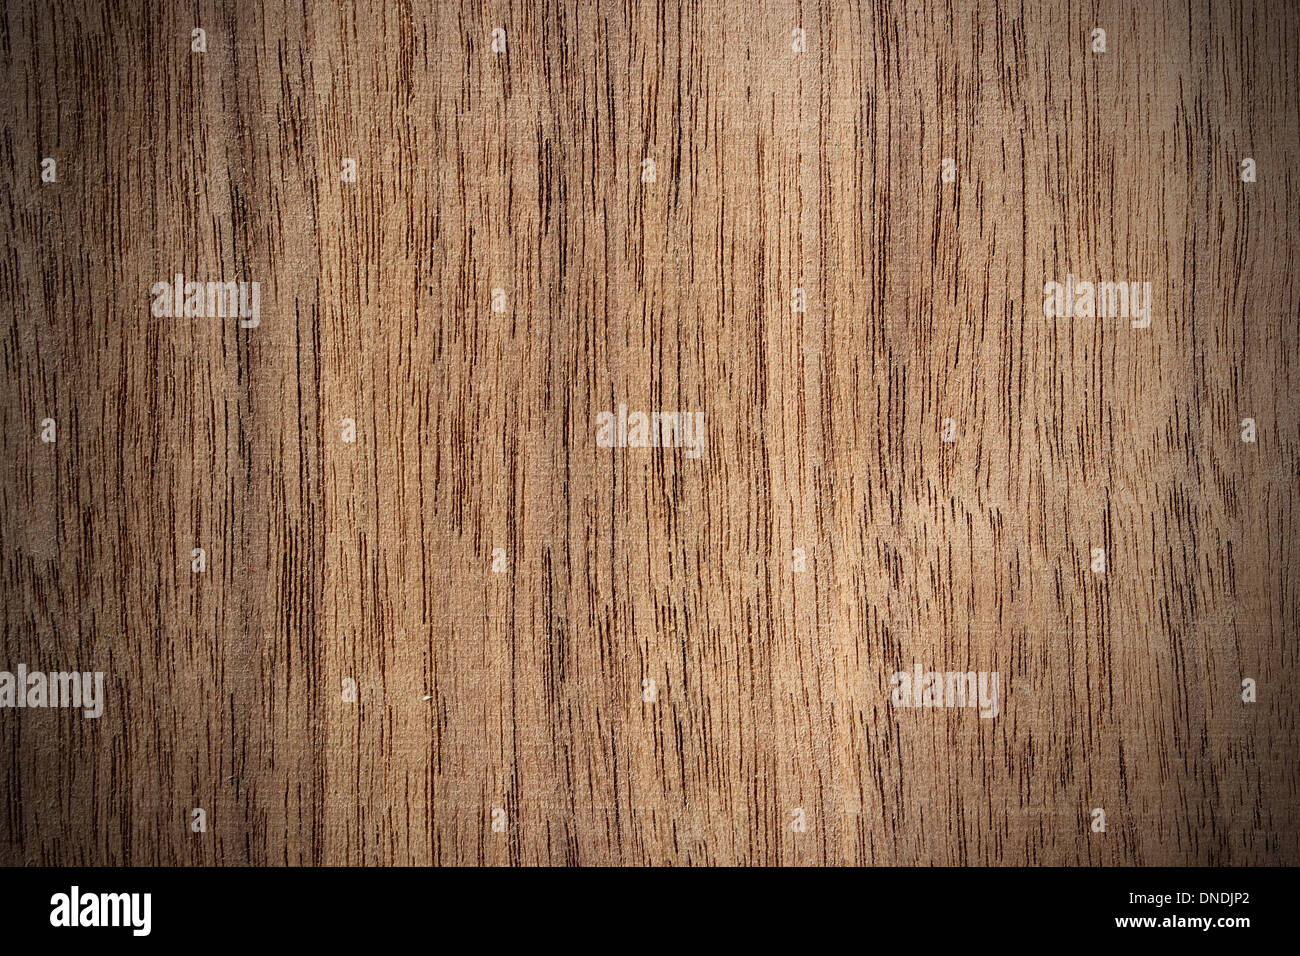 Wood surface, american walnut (Juglans nigra) - vertical lines Stock Photo